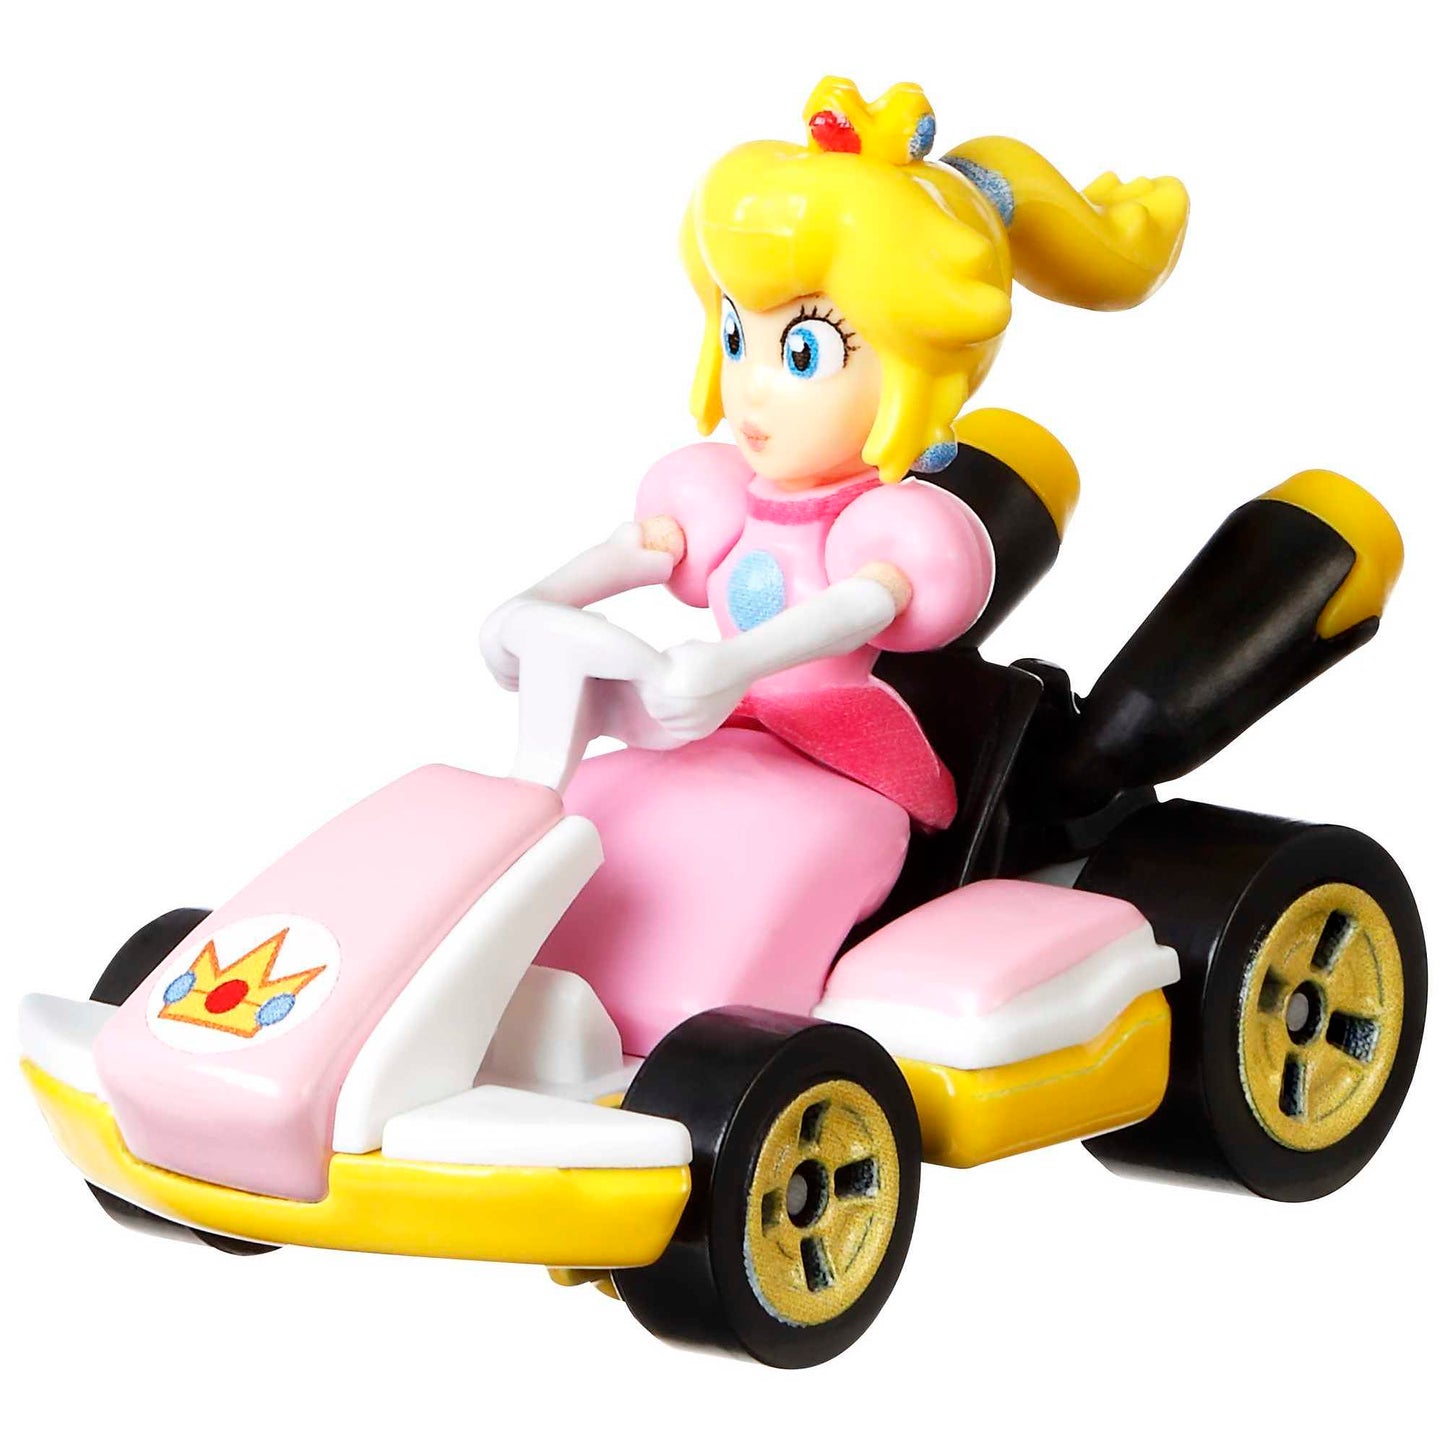 HOT WHEELS Mario Kart Vehicle - Assorted*